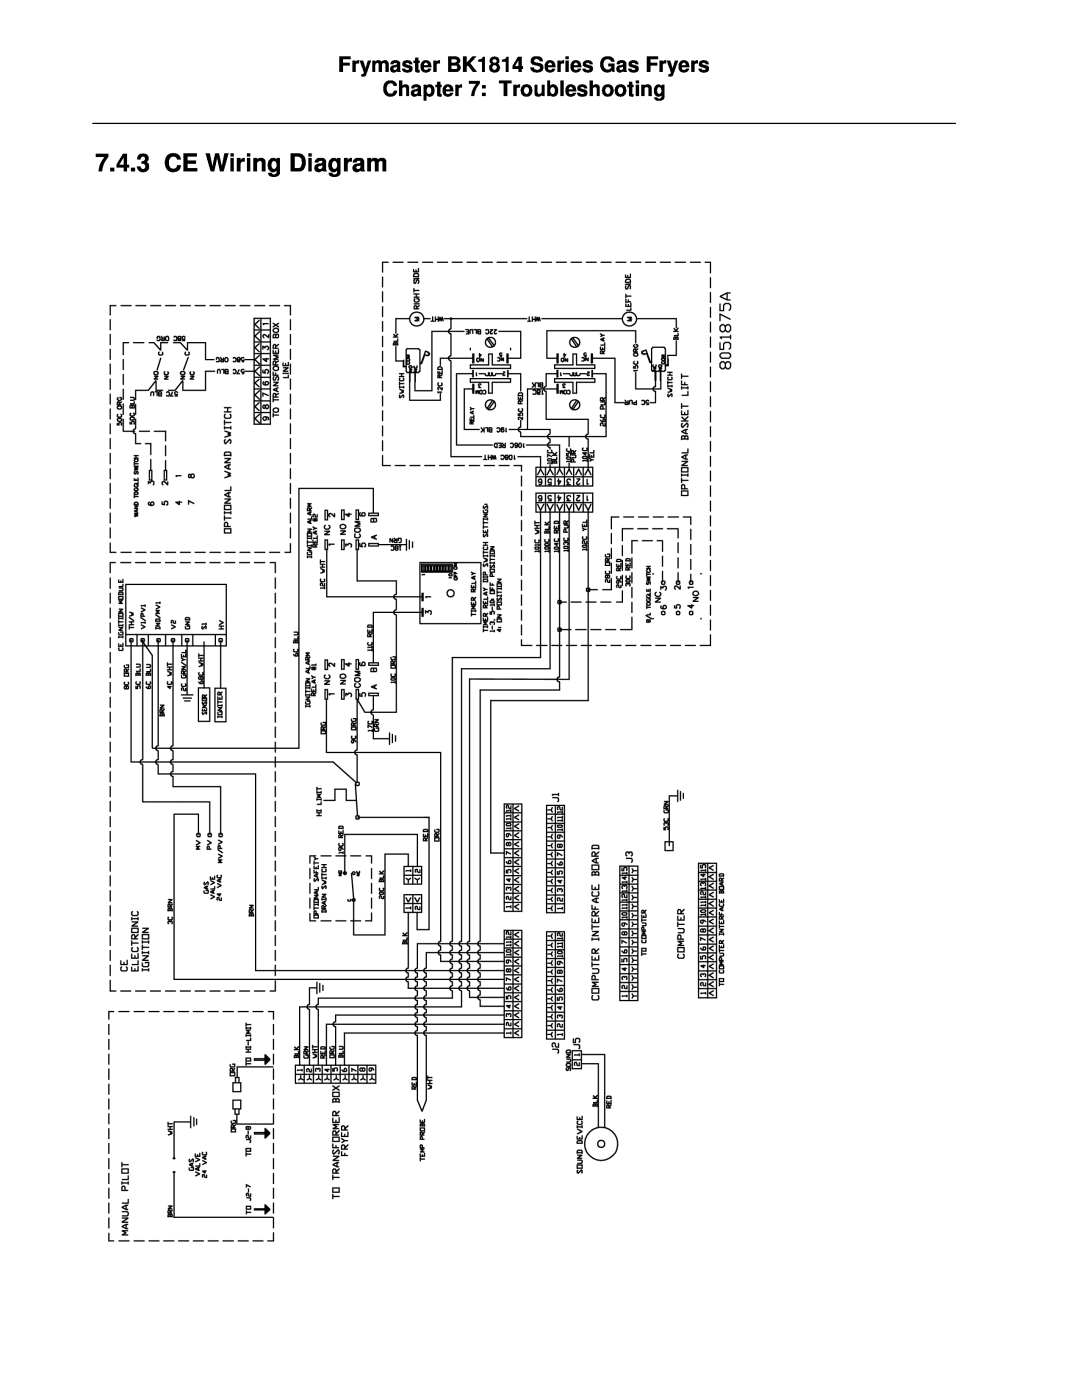 Frymaster operation manual CE Wiring Diagram, Frymaster BK1814 Series Gas Fryers Troubleshooting 